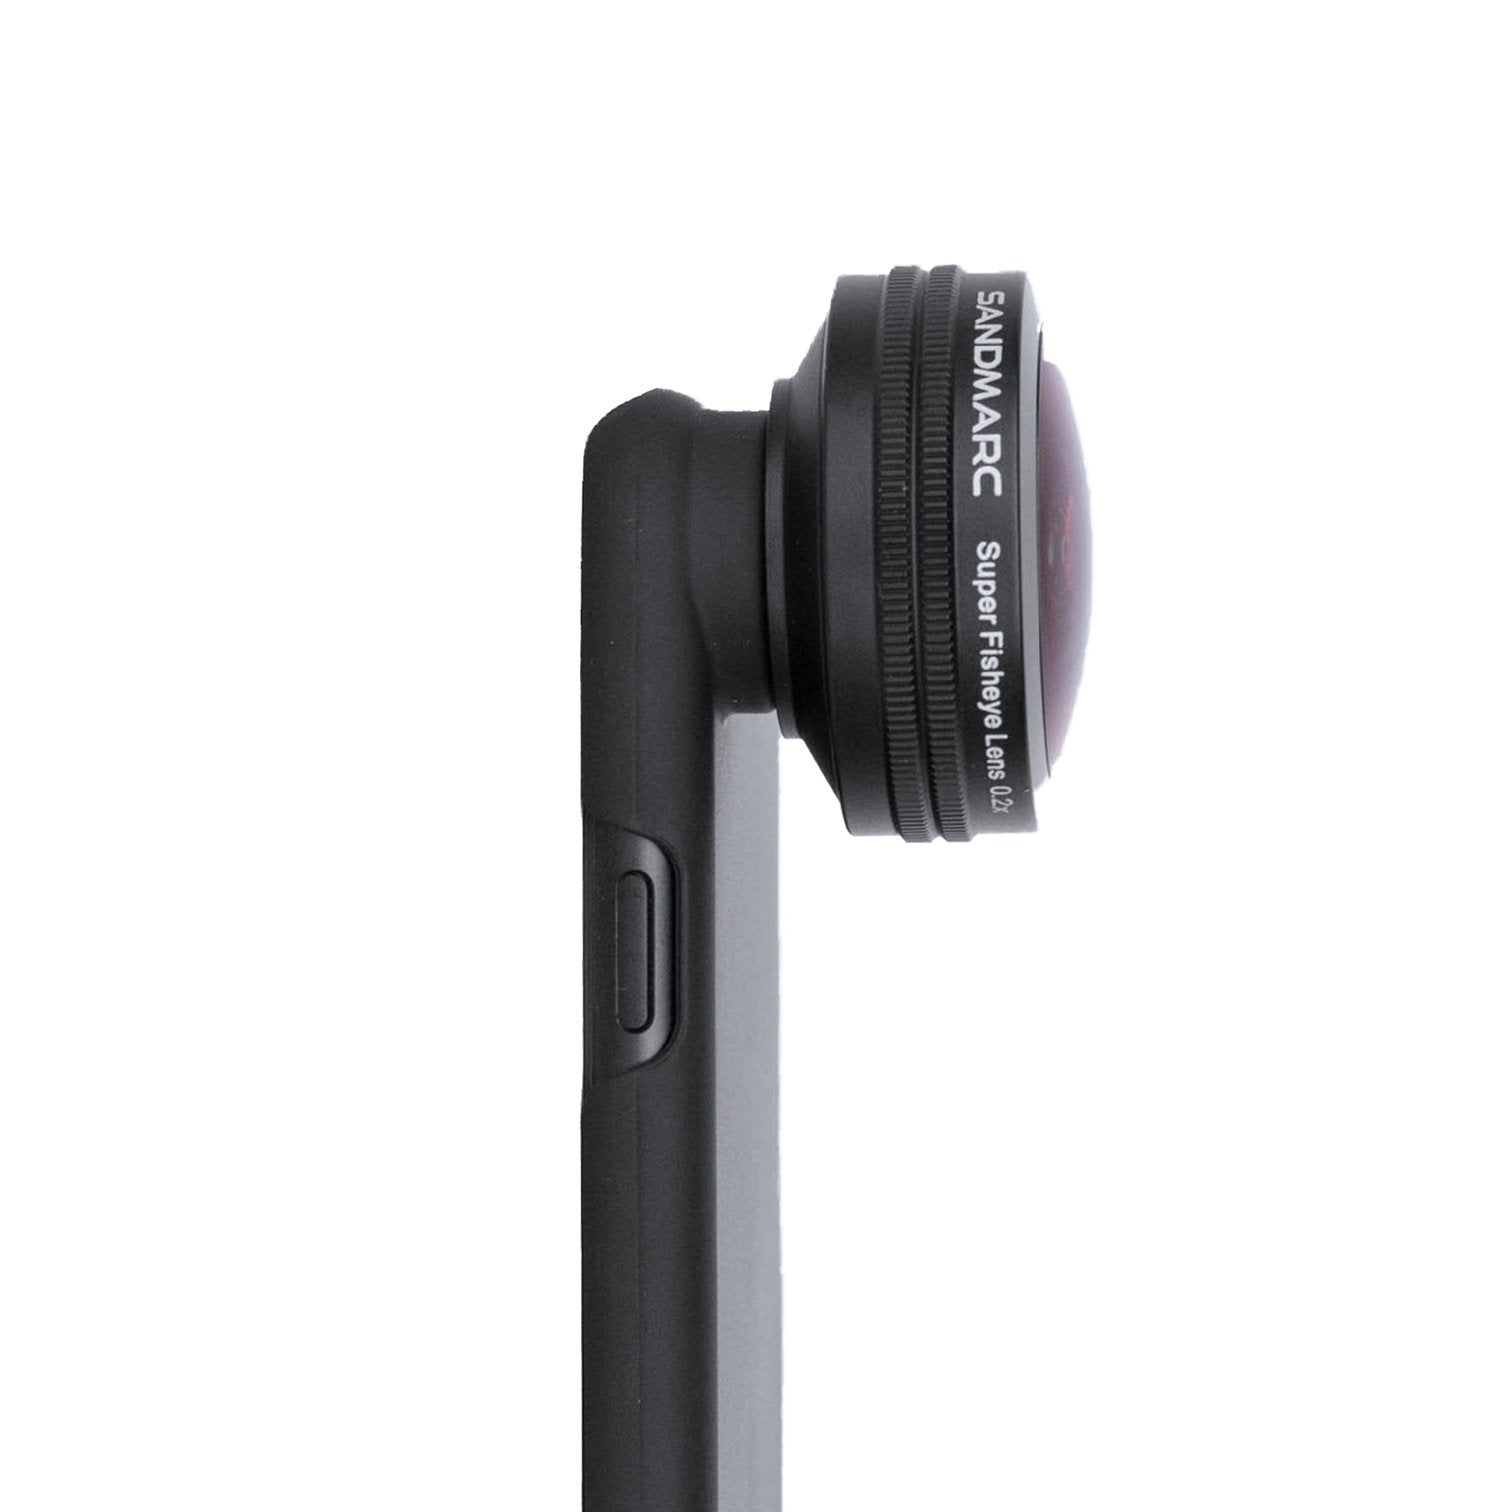 Fisheye Lens Edition - iPhone 7 Plus - SANDMARC